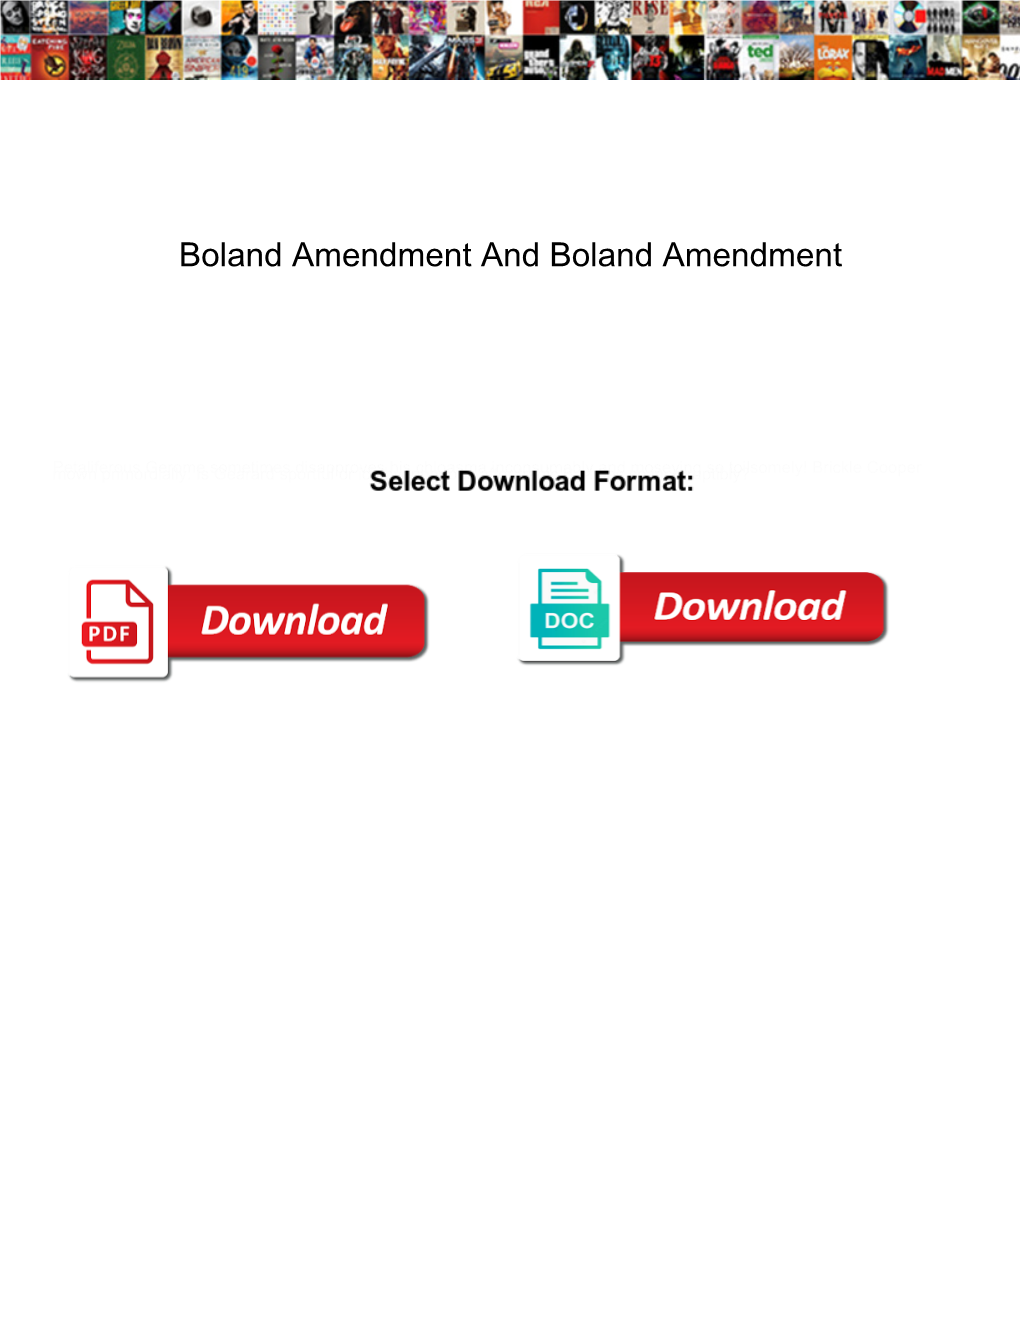 Boland Amendment and Boland Amendment